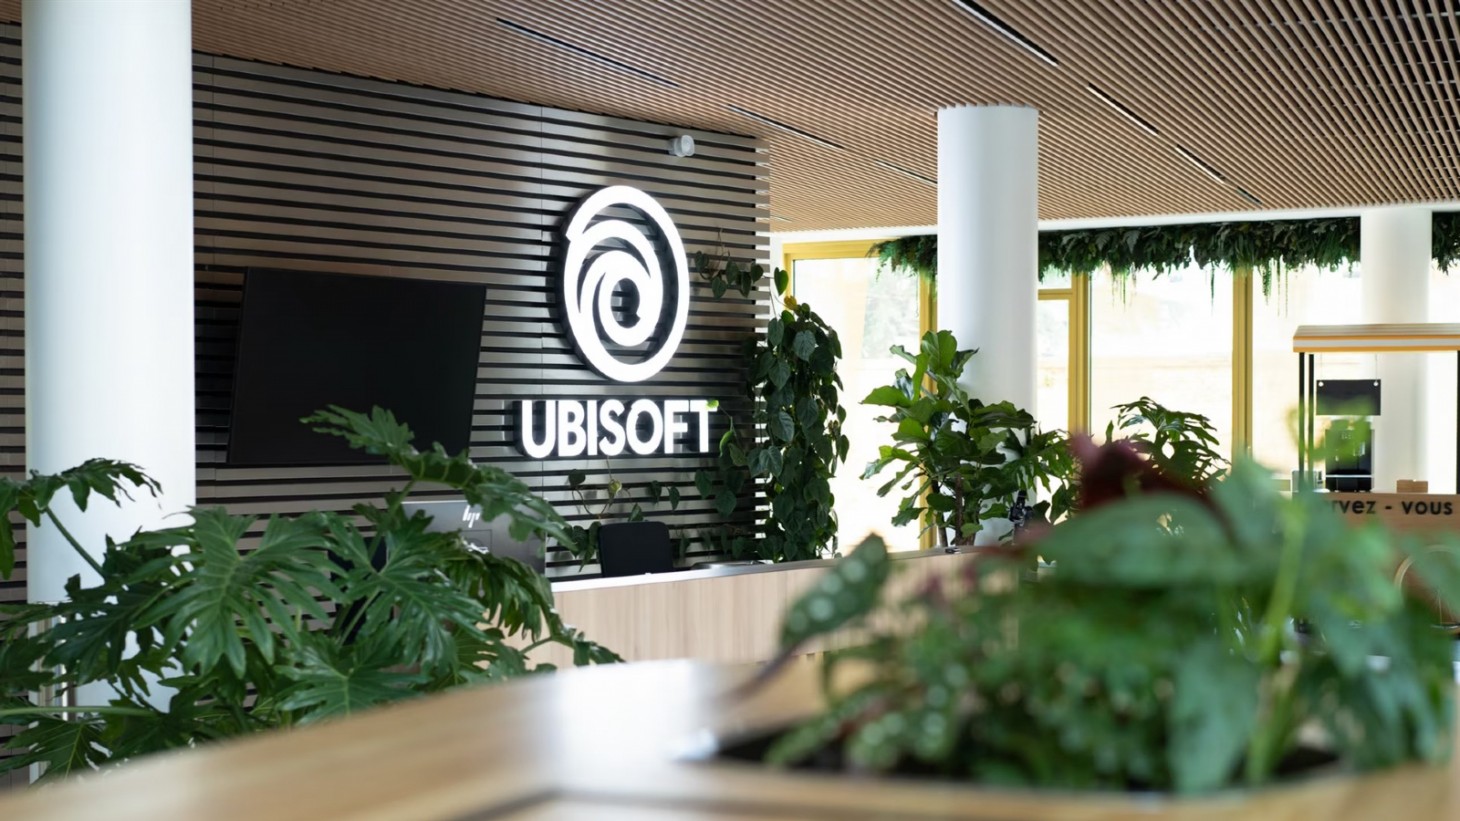 Ubisoft, Assassin's Creed, Far Cry, Assassin's Creed Mirage, acoso sexual, hostigamiento, policía francesa, Francia, París Serge Hascoët, Tommy François